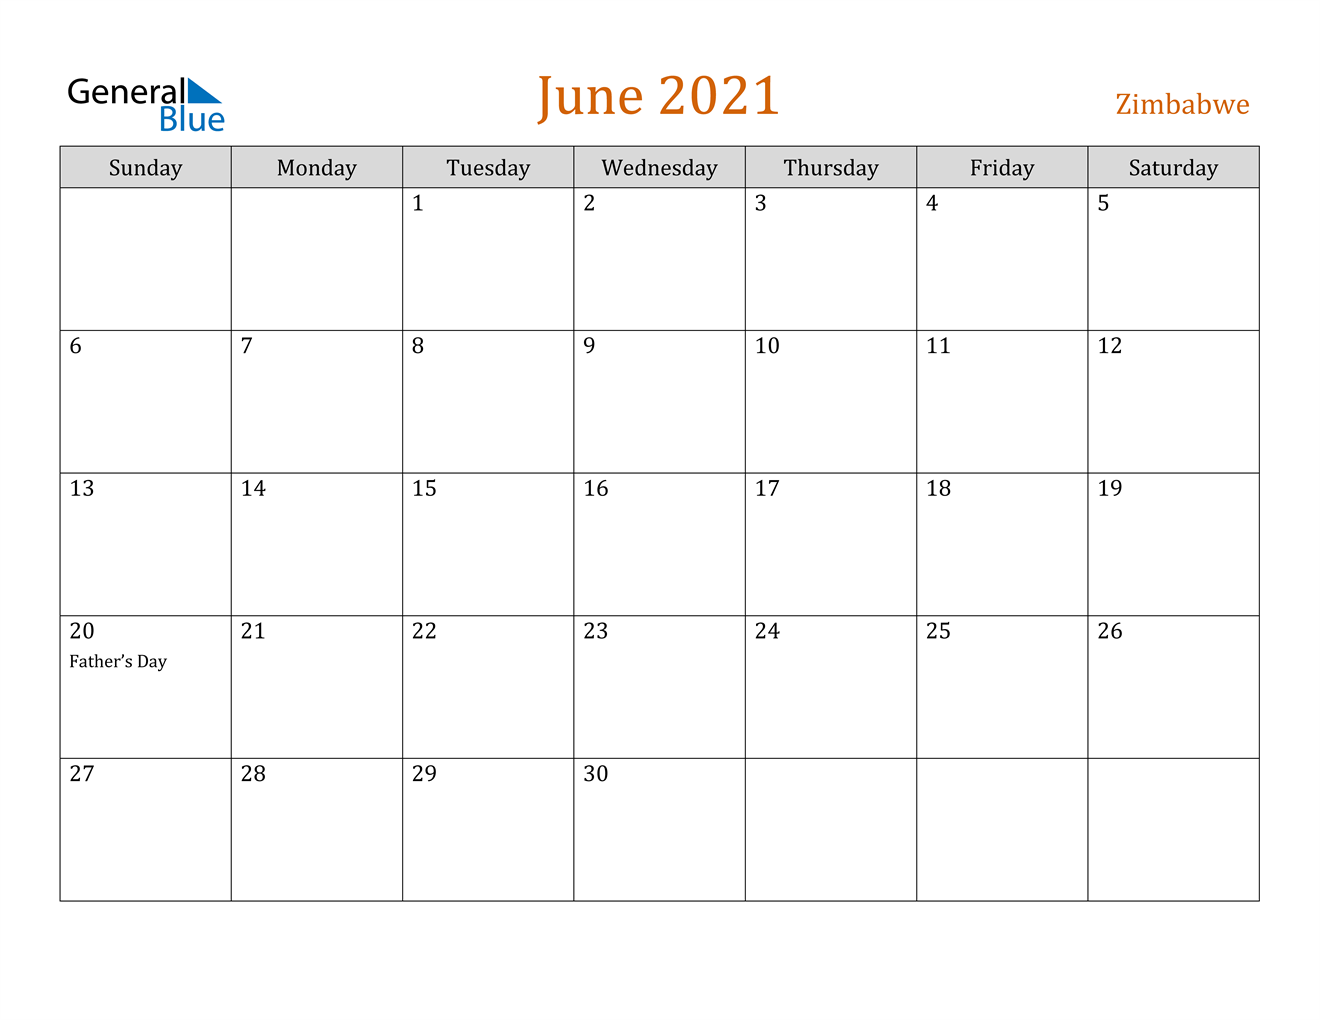 Zimbabwe June 2021 Calendar with Holidays